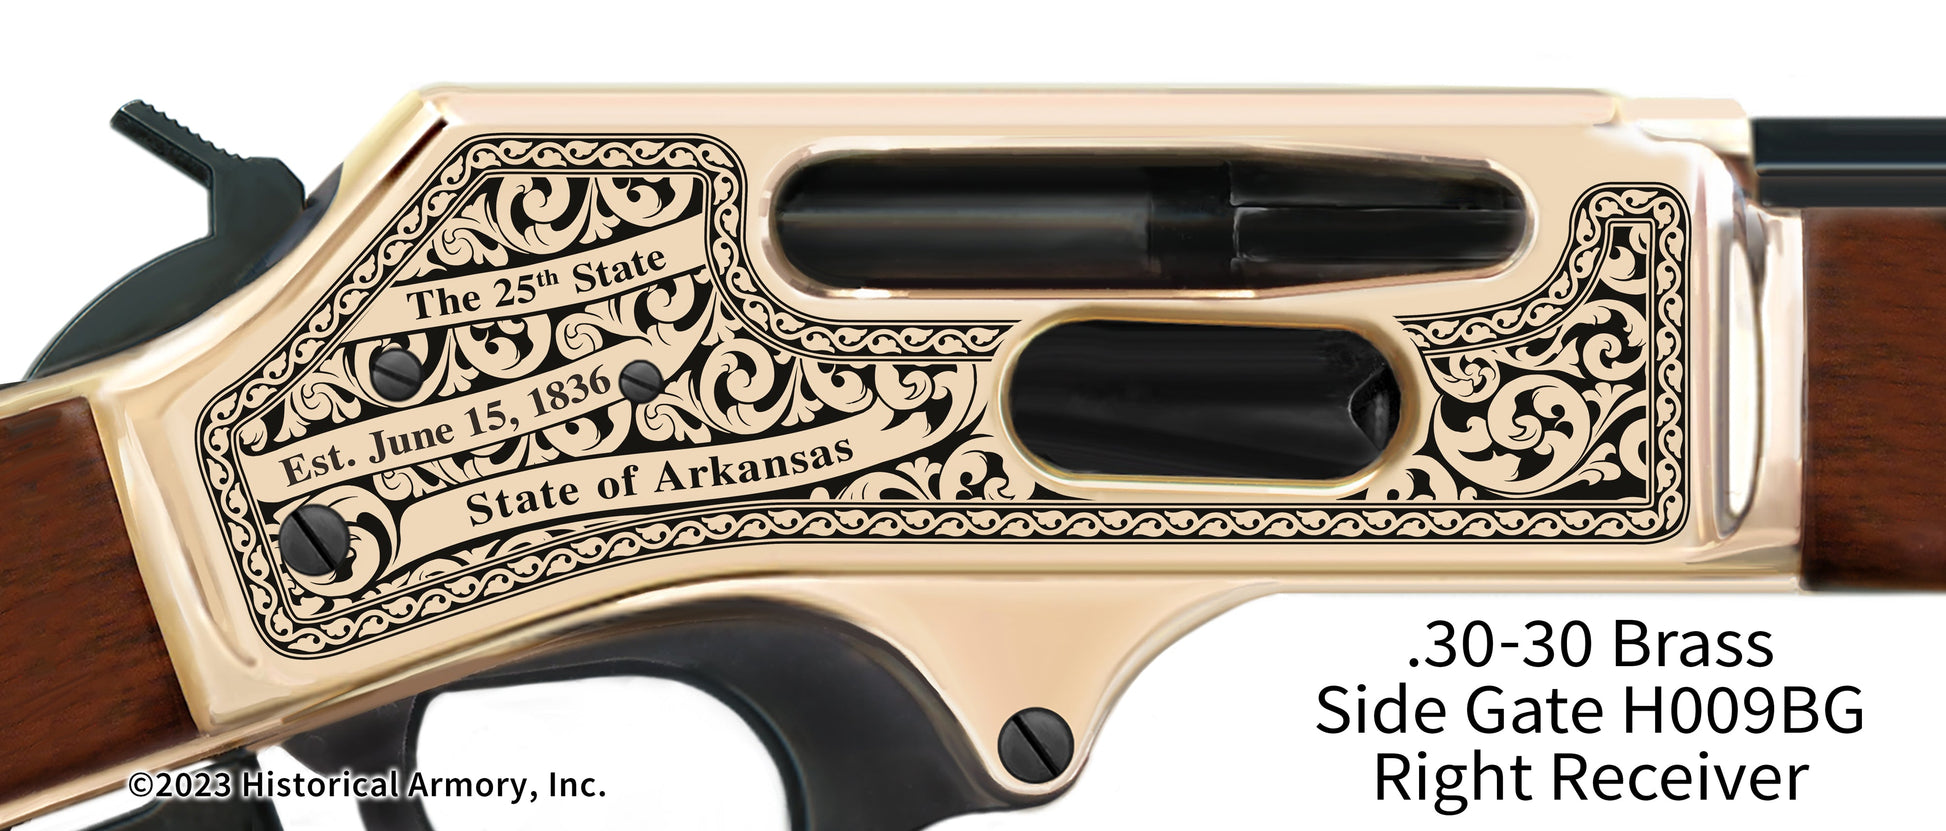 Lonoke County Arkansas Engraved Henry .30-30 Brass Side Gate Rifle